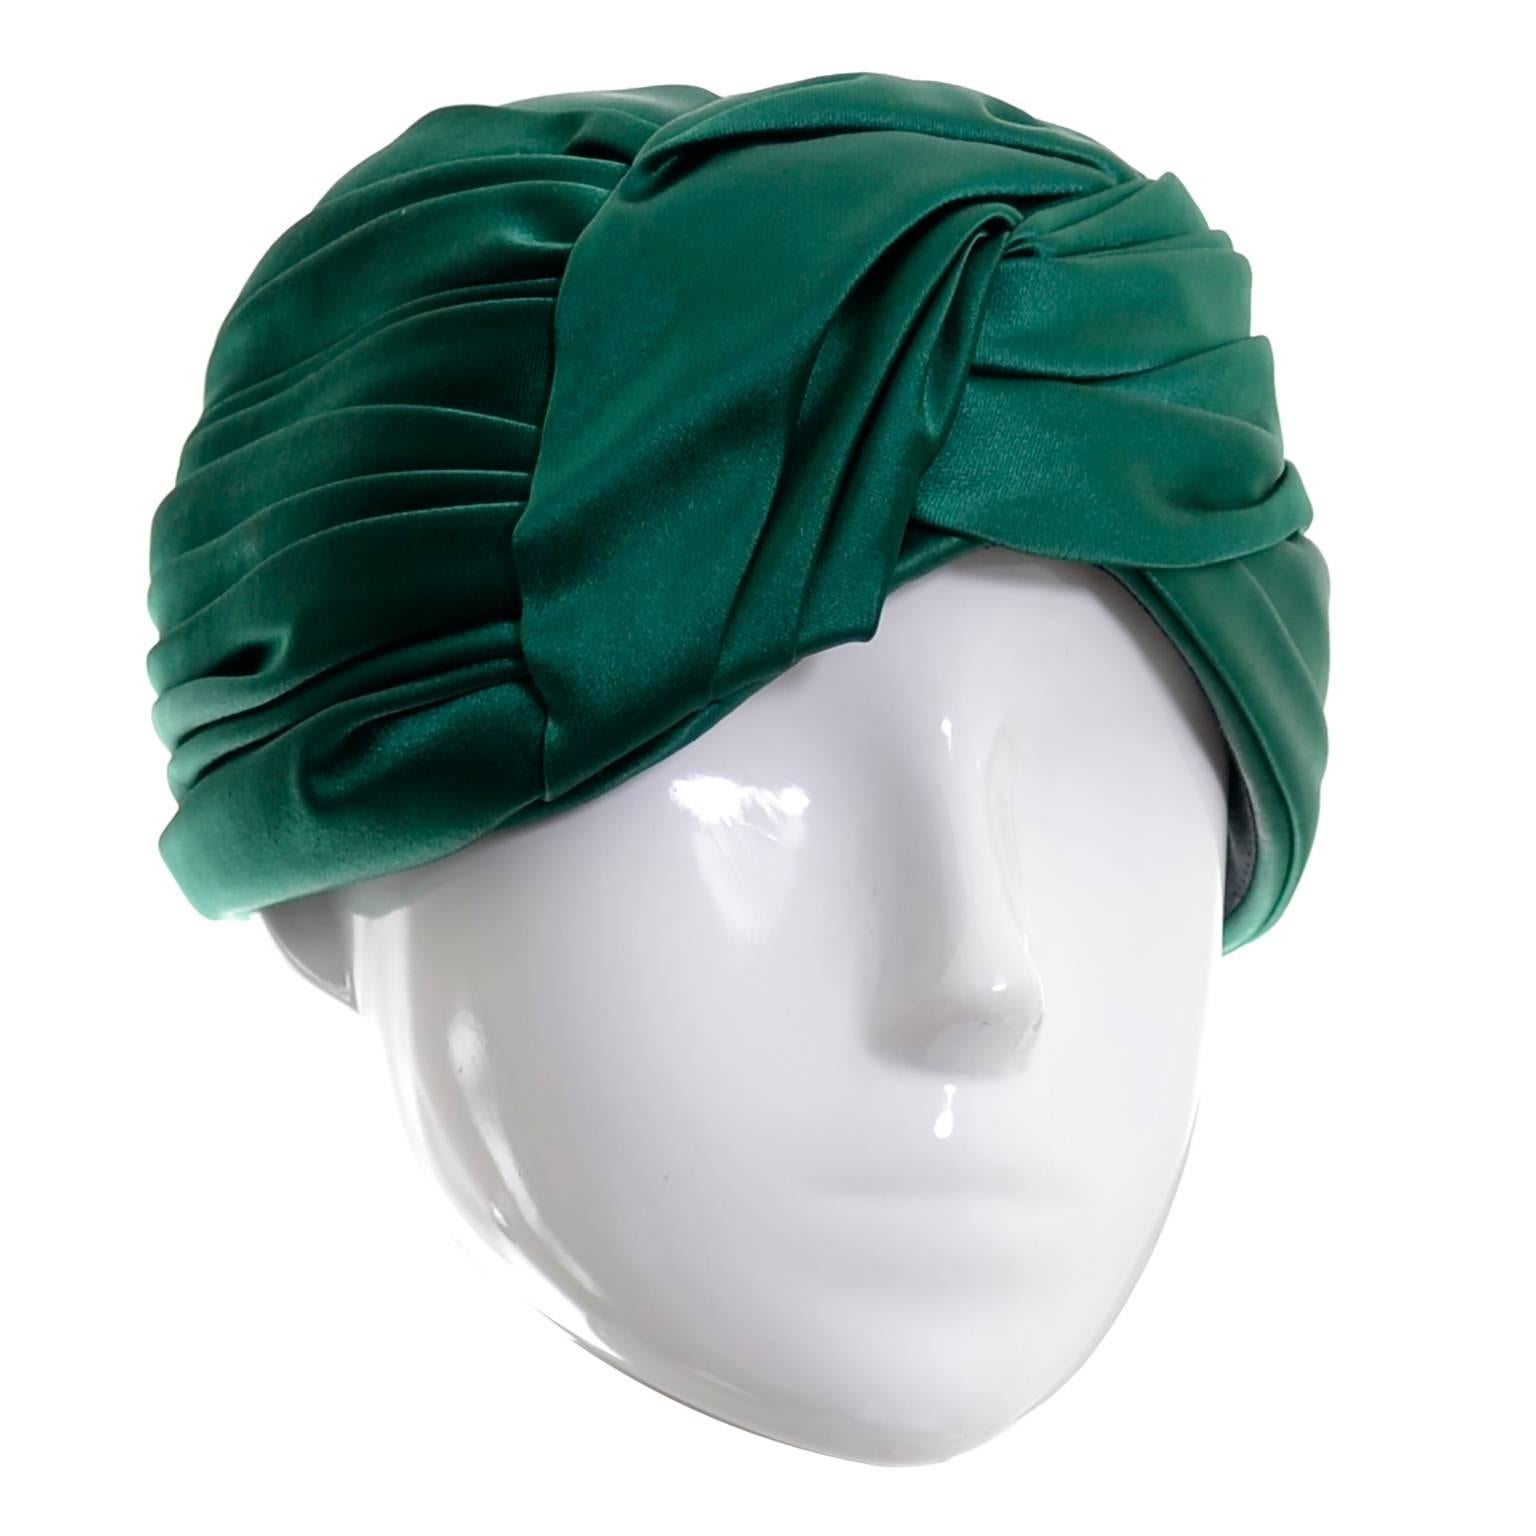 Vintage Christian Dior Hat Miss Dior Green Satin Turban style Chapeau 1960s